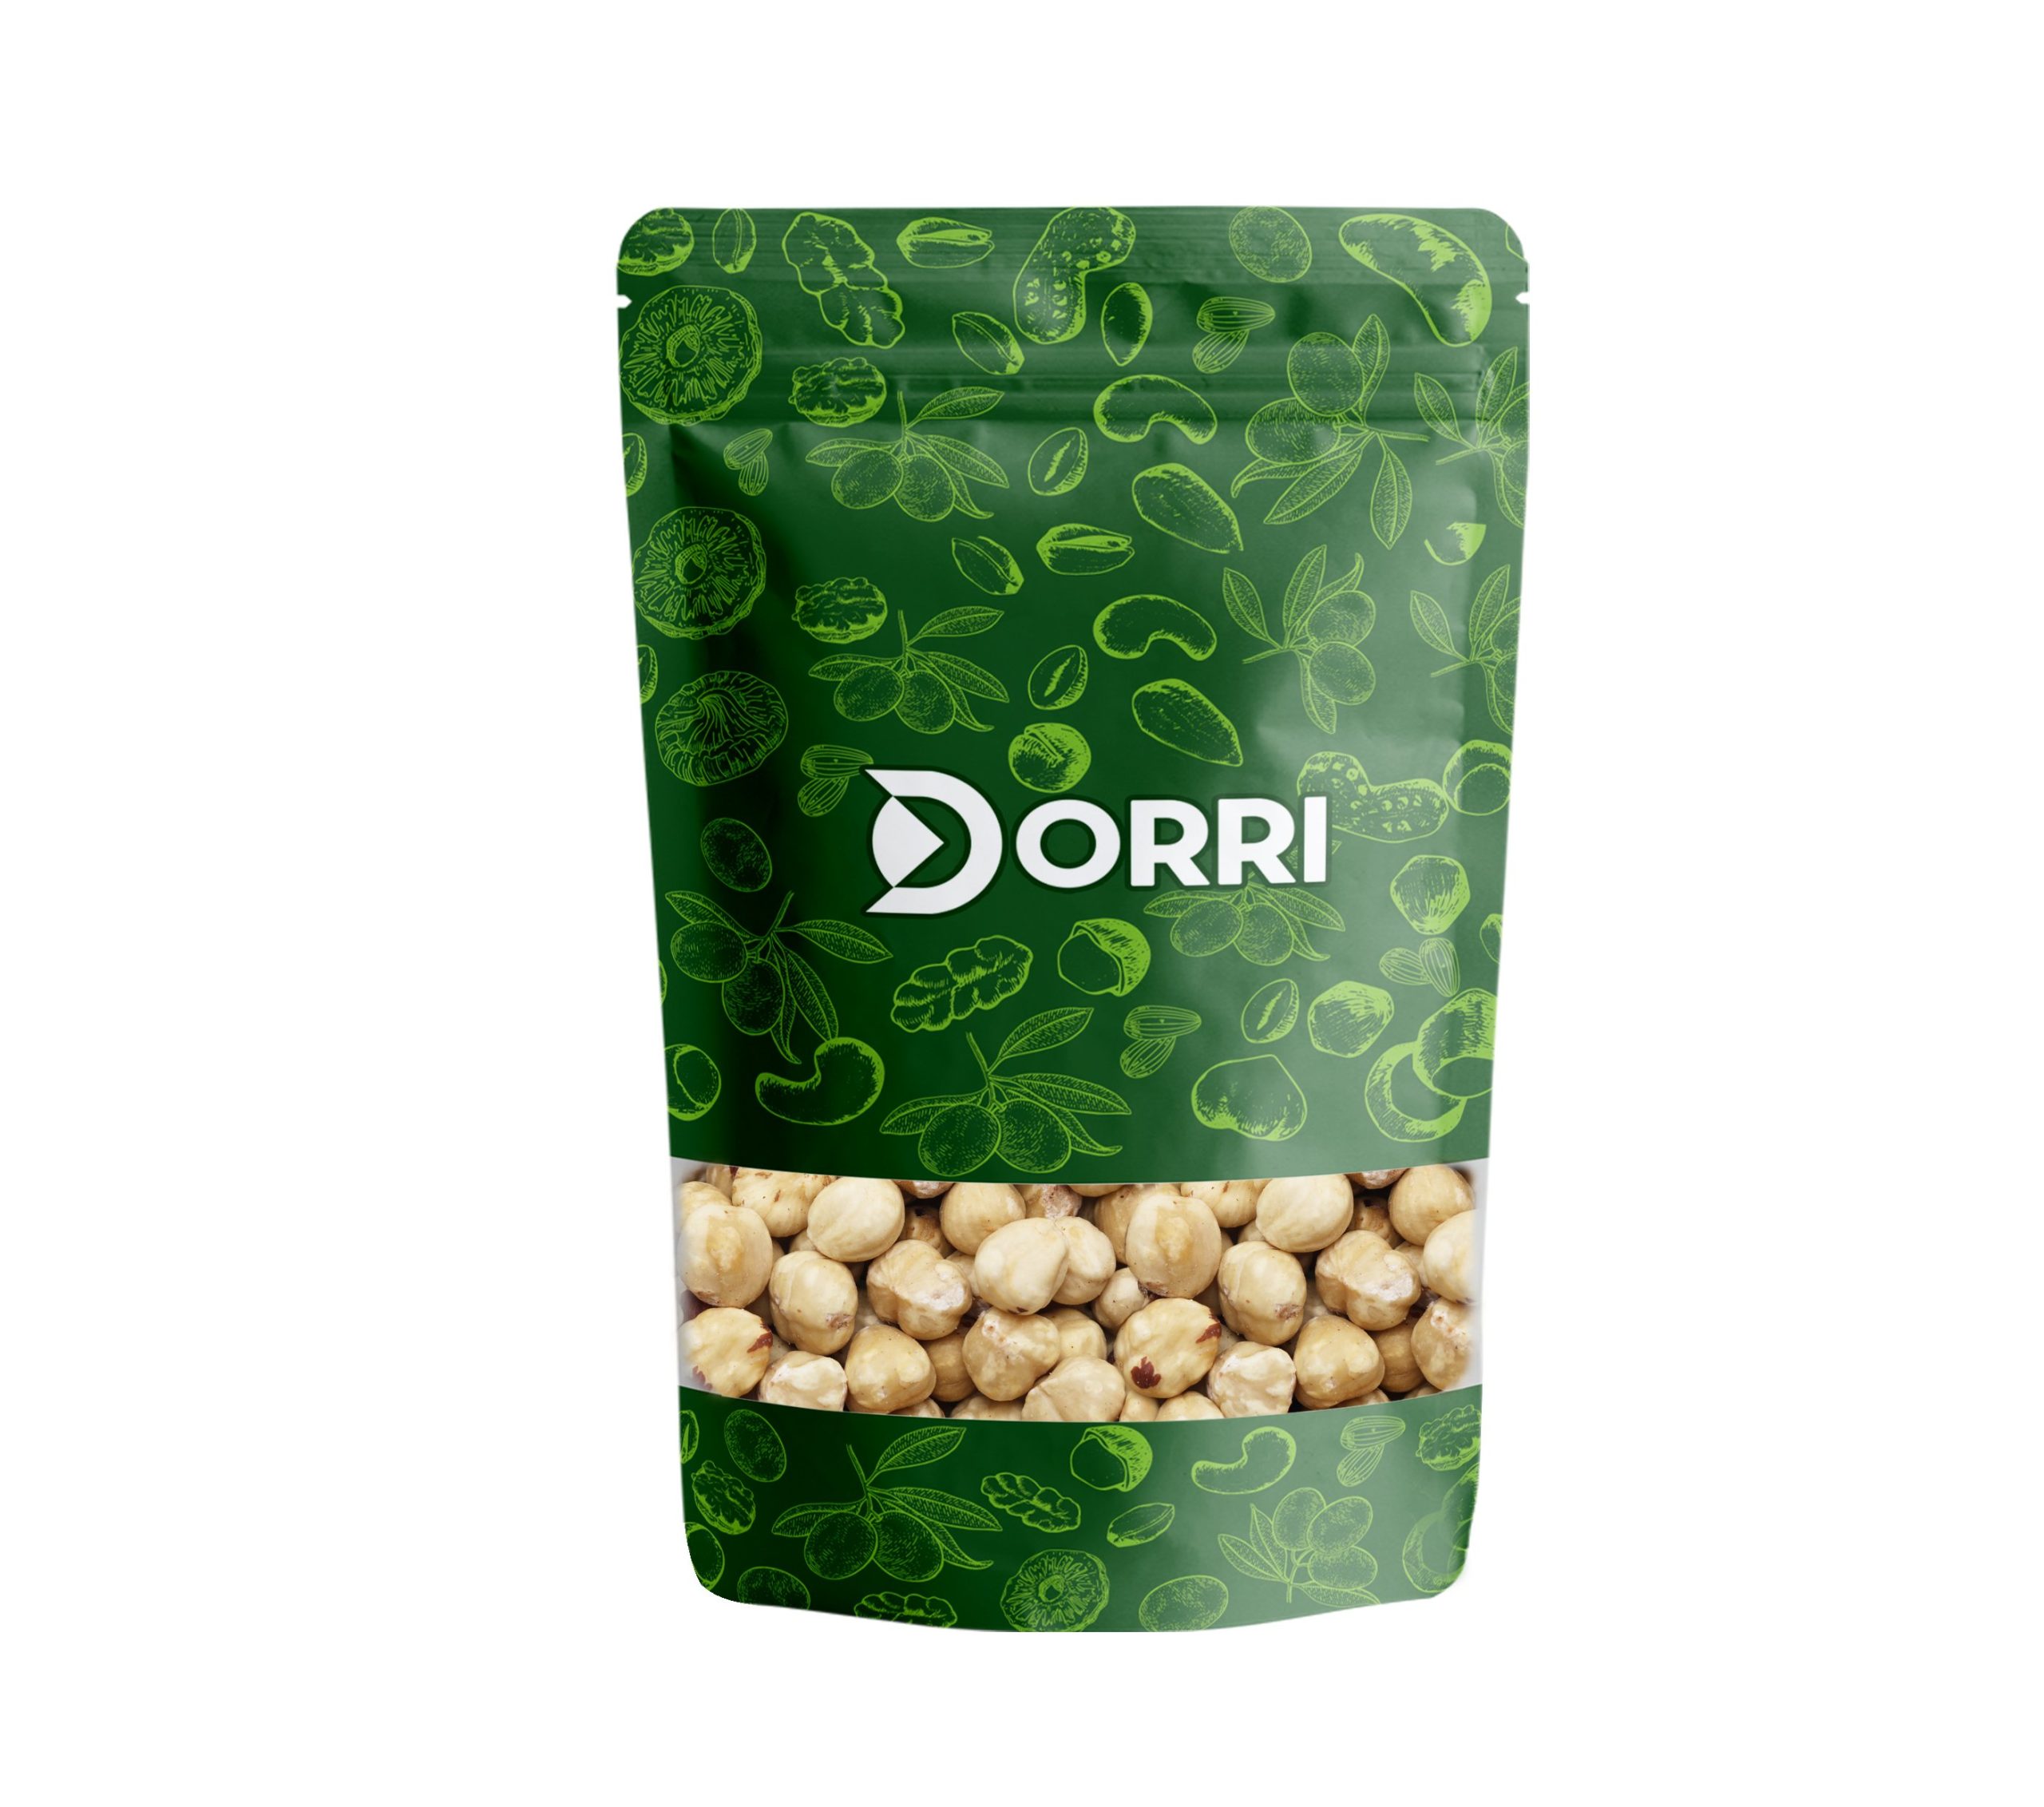 Dorri - Roasted Hazelnuts